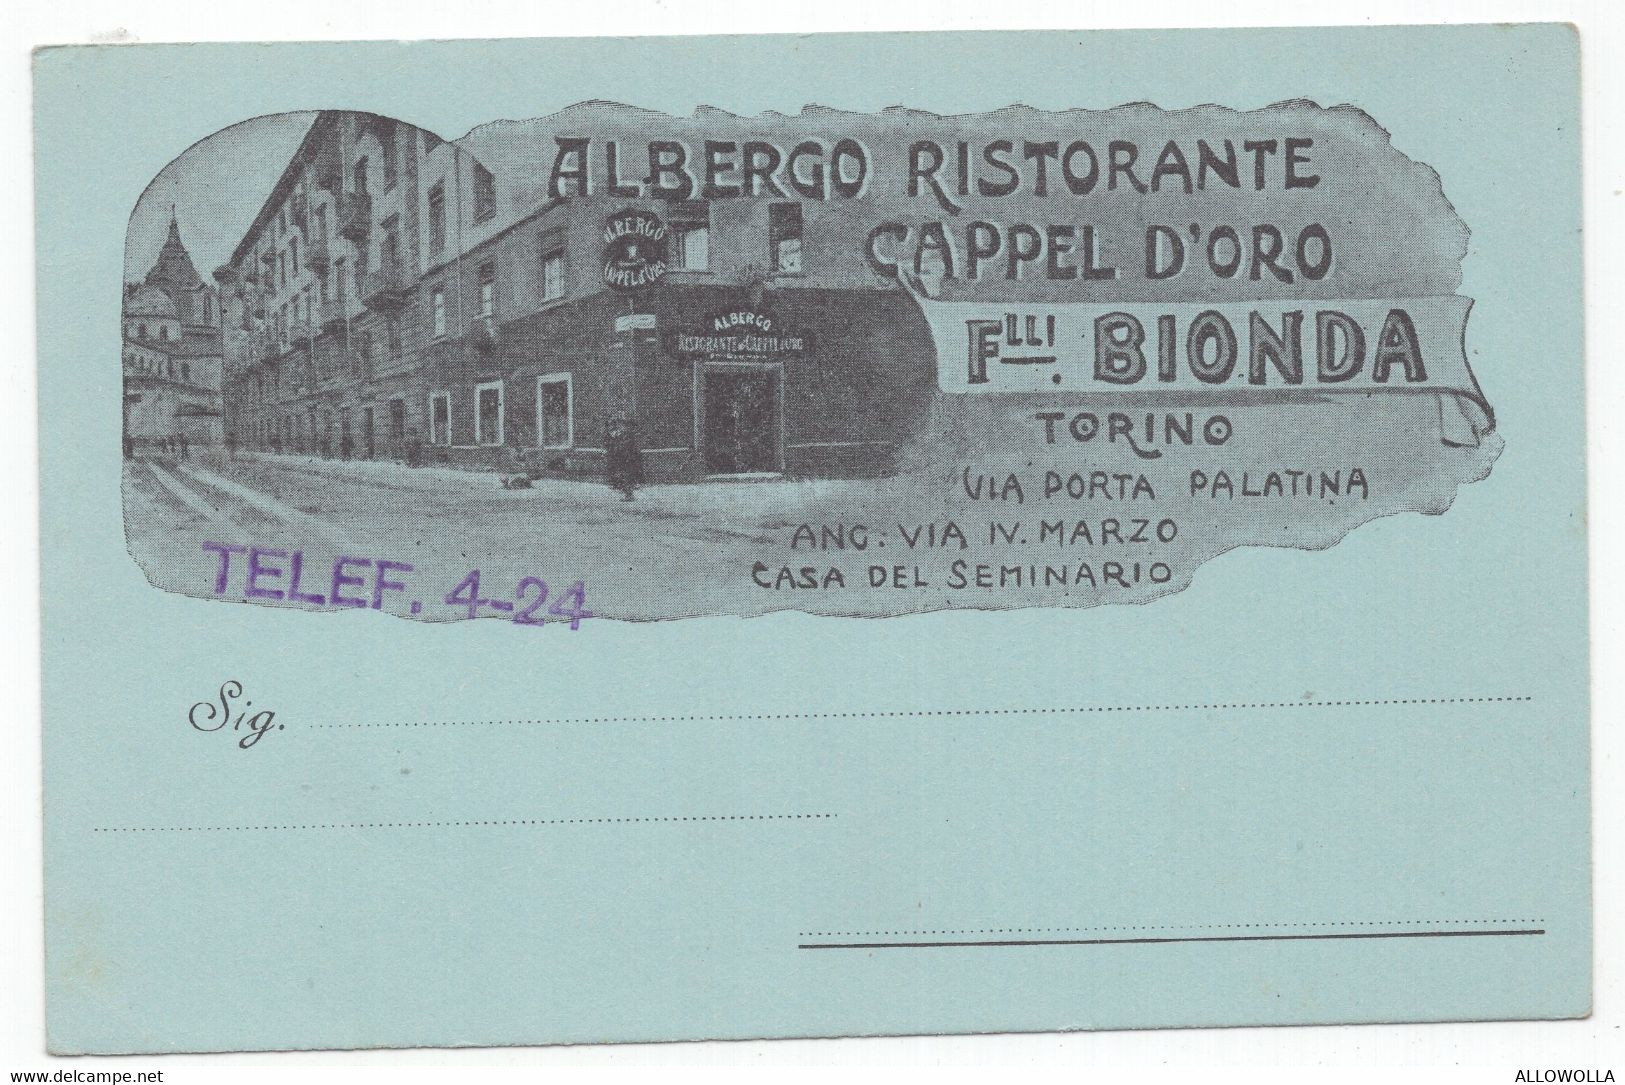 18507 " ALBERGO RISTORANTE CAPPEL D'ORO-F.LLI BIONDA-TORINO "VERA FOTO-CART. POST. NON SPED. - Wirtschaften, Hotels & Restaurants